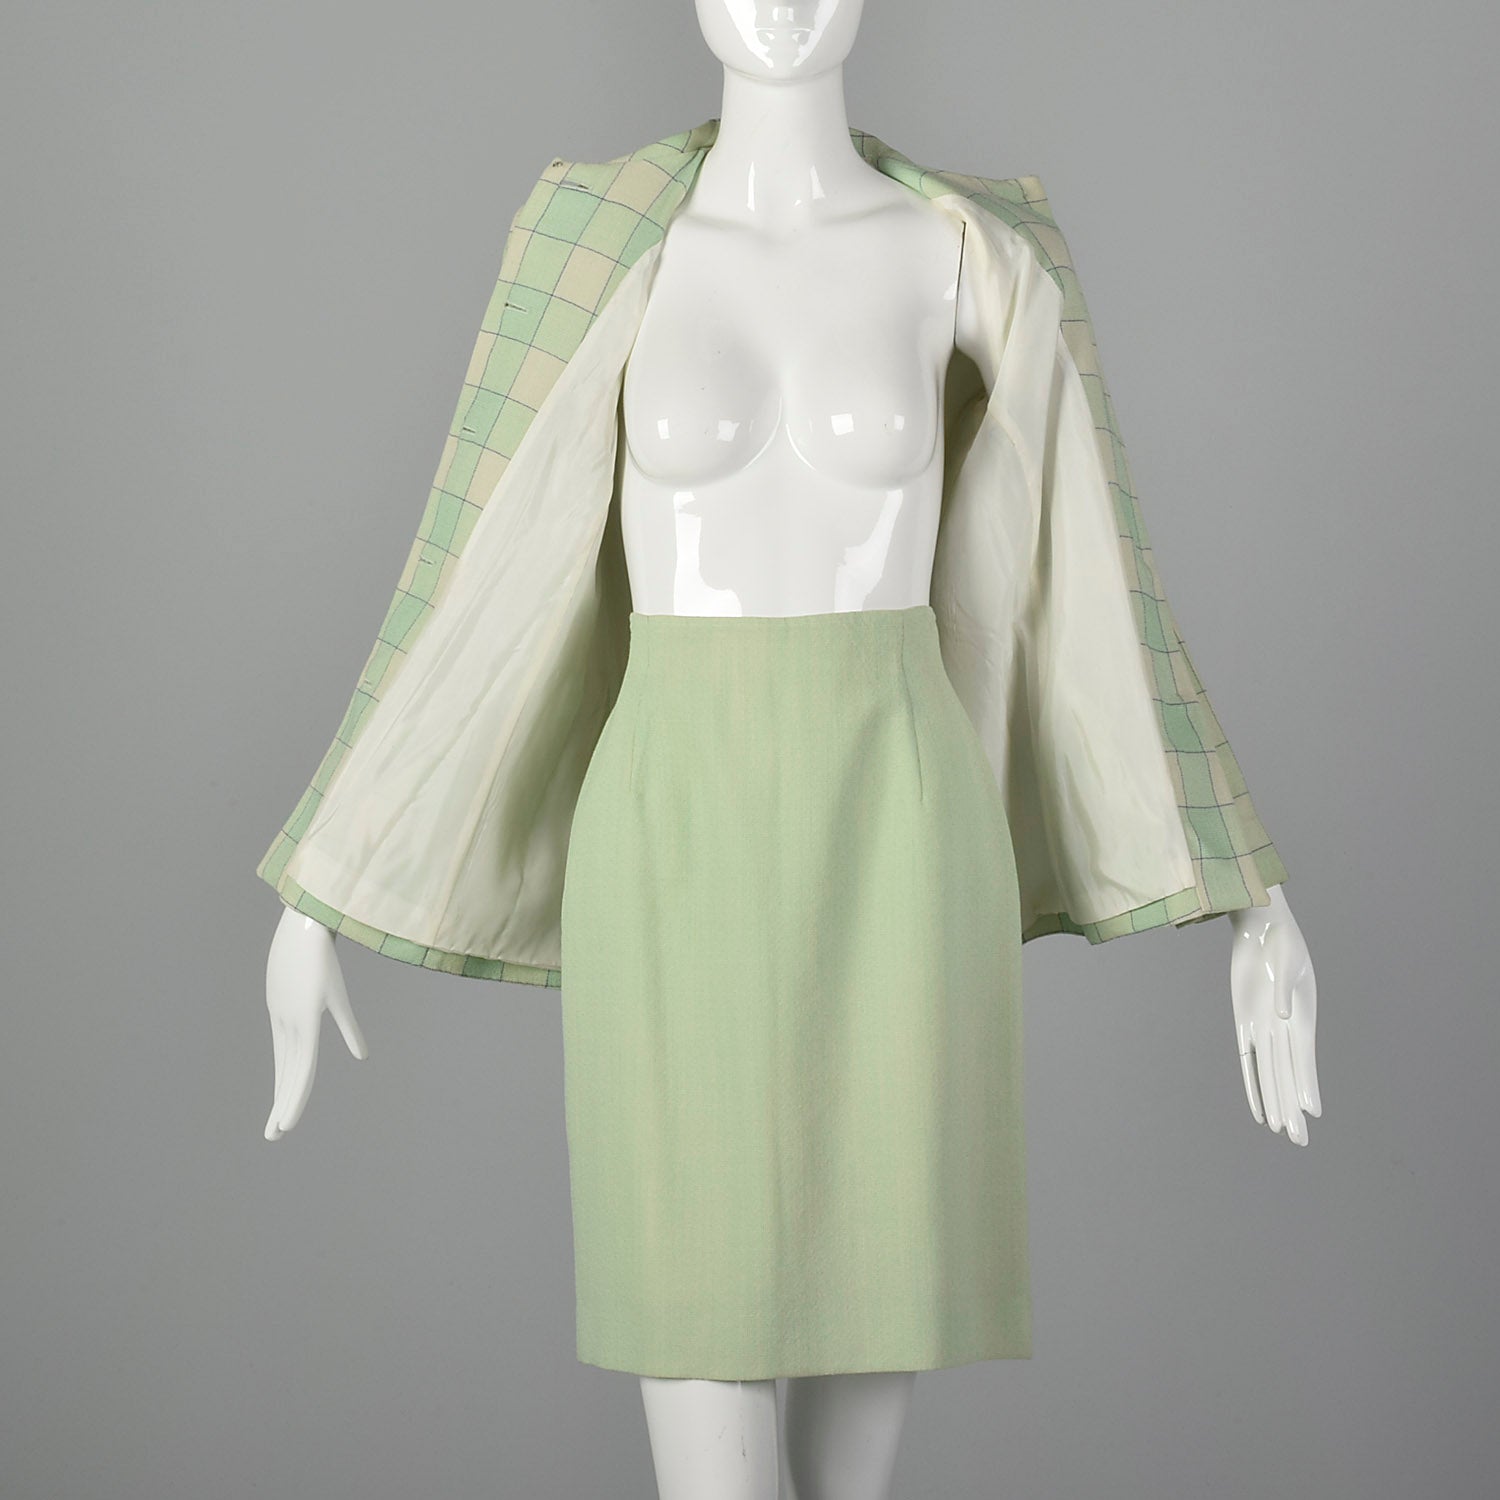 Small Oscar de la Renta 1980s Skirt Suit